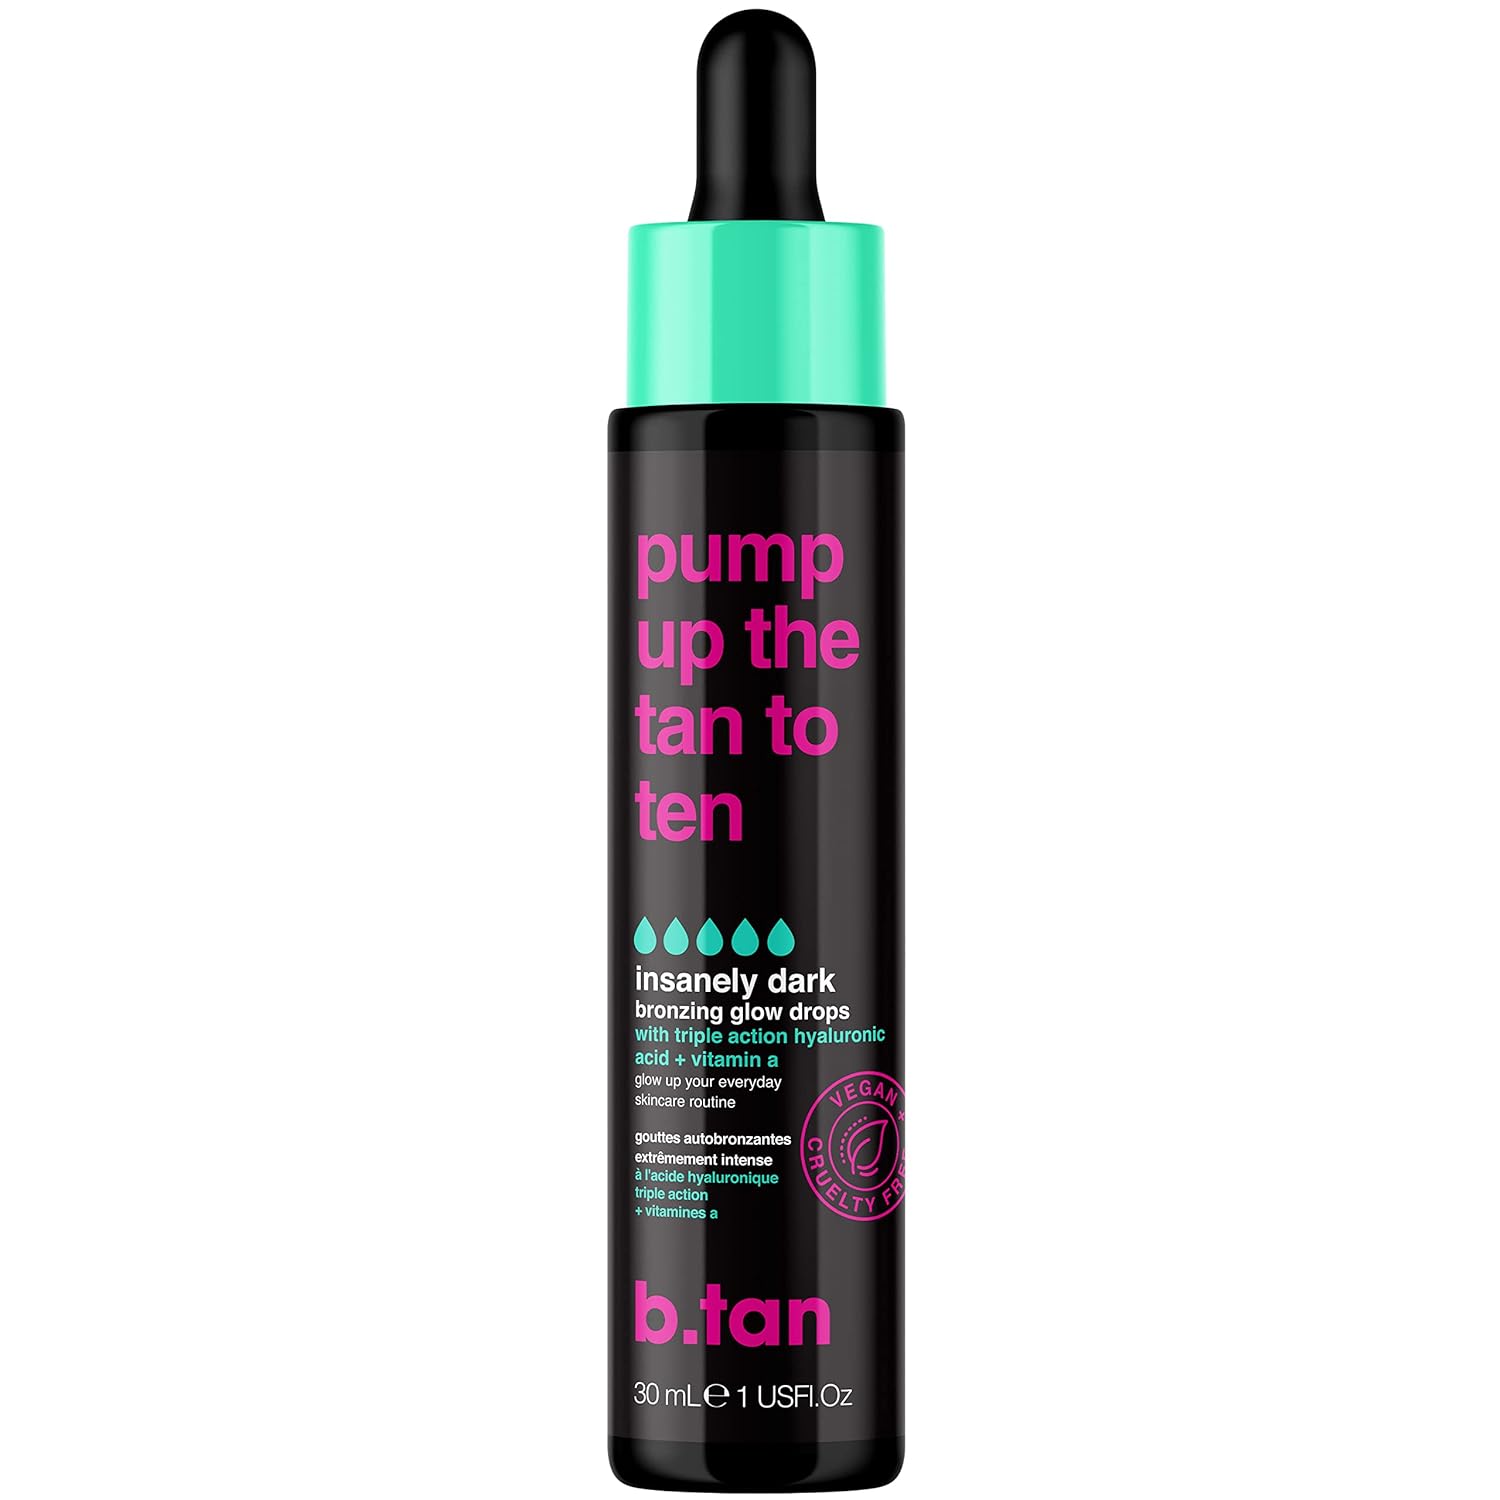 b.tan Darkest Self Tan Drops for Face & Body | Pump Up the Tan to Ten - Insanely Dark Self Tanning Bronzing Glow Drops, Vegan, Cruelty Free, 1.0 Fl Oz